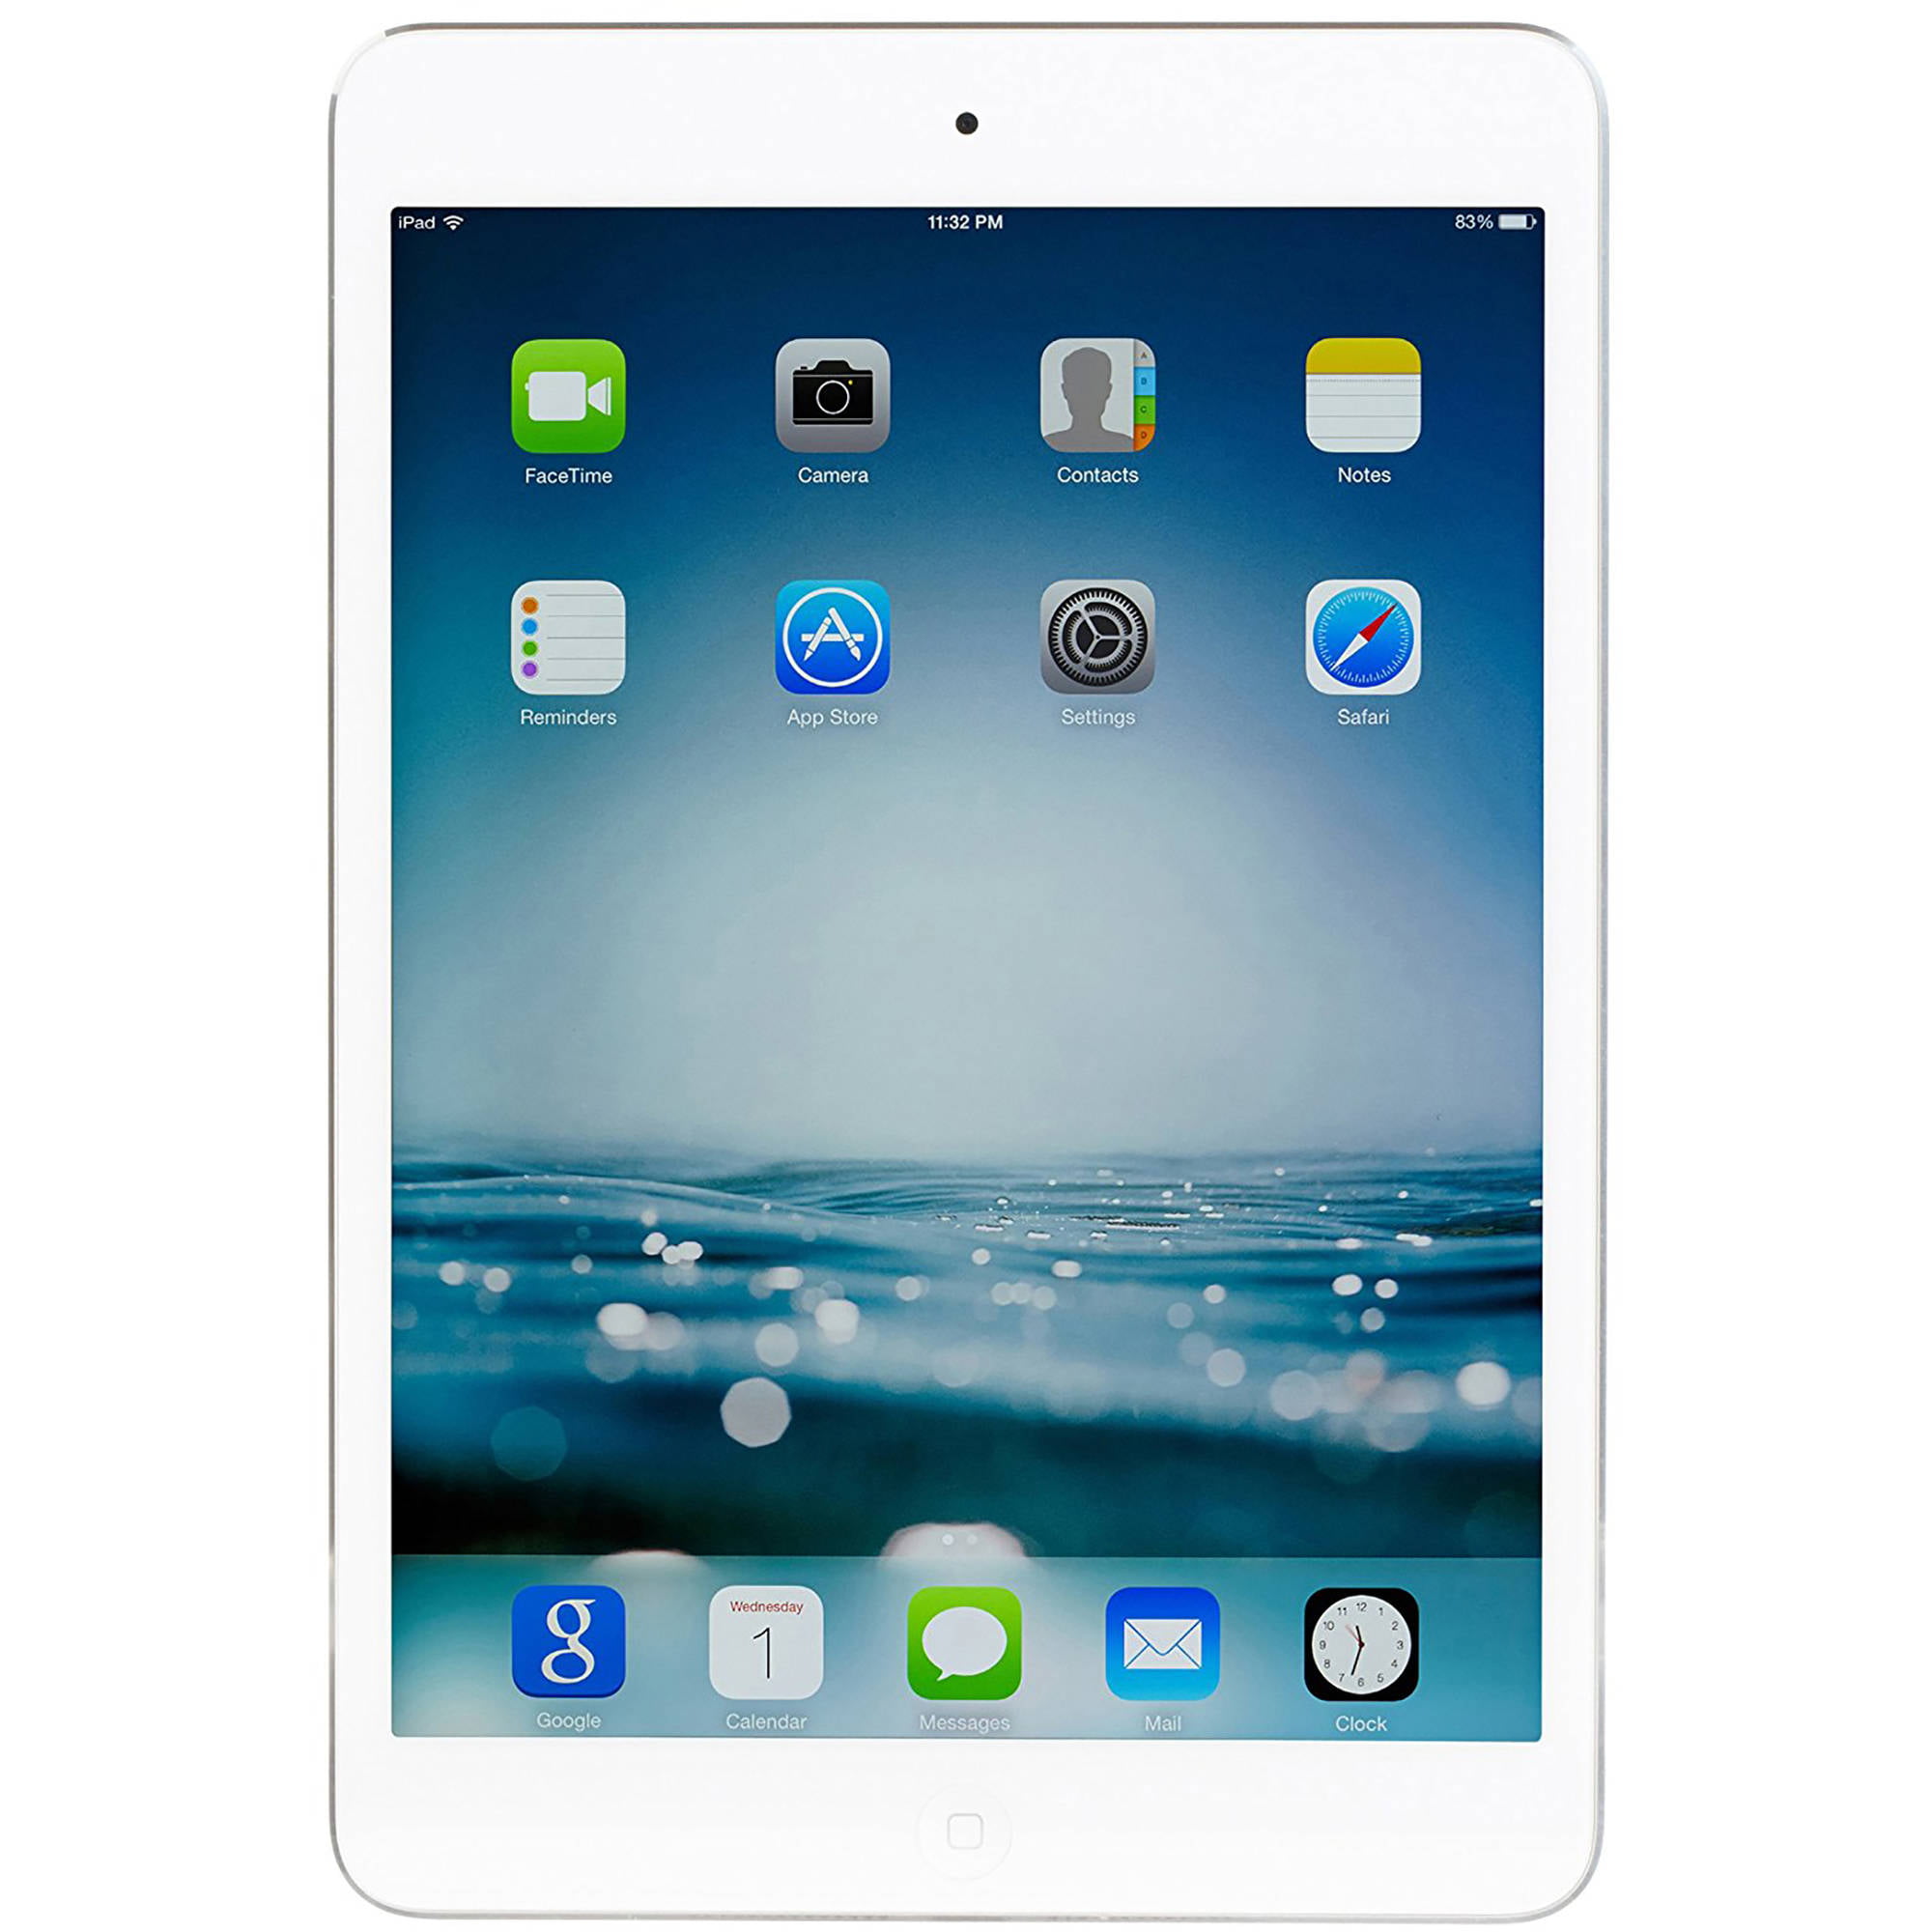 Apple iPad Mini 2 16GB Unlocked 4G LTE Dual-Core Tablet - White